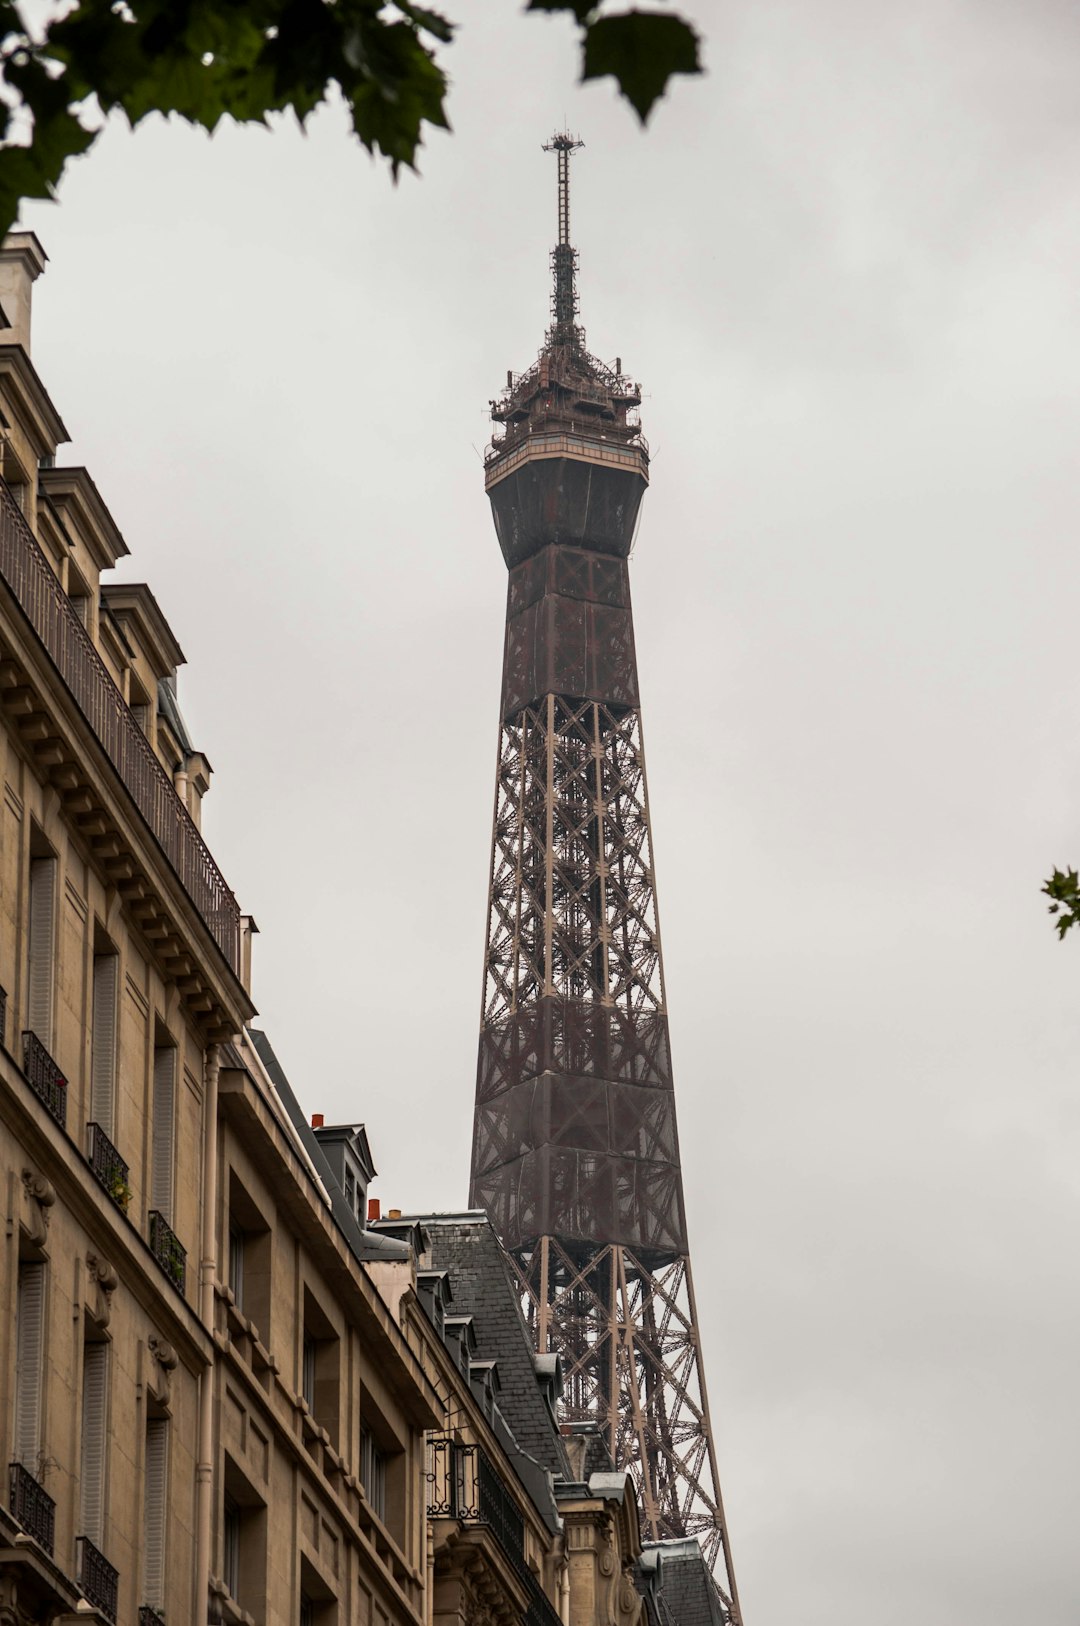 Travel Tips and Stories of Tour Eiffel - Parc du Champ-de-Mars in France